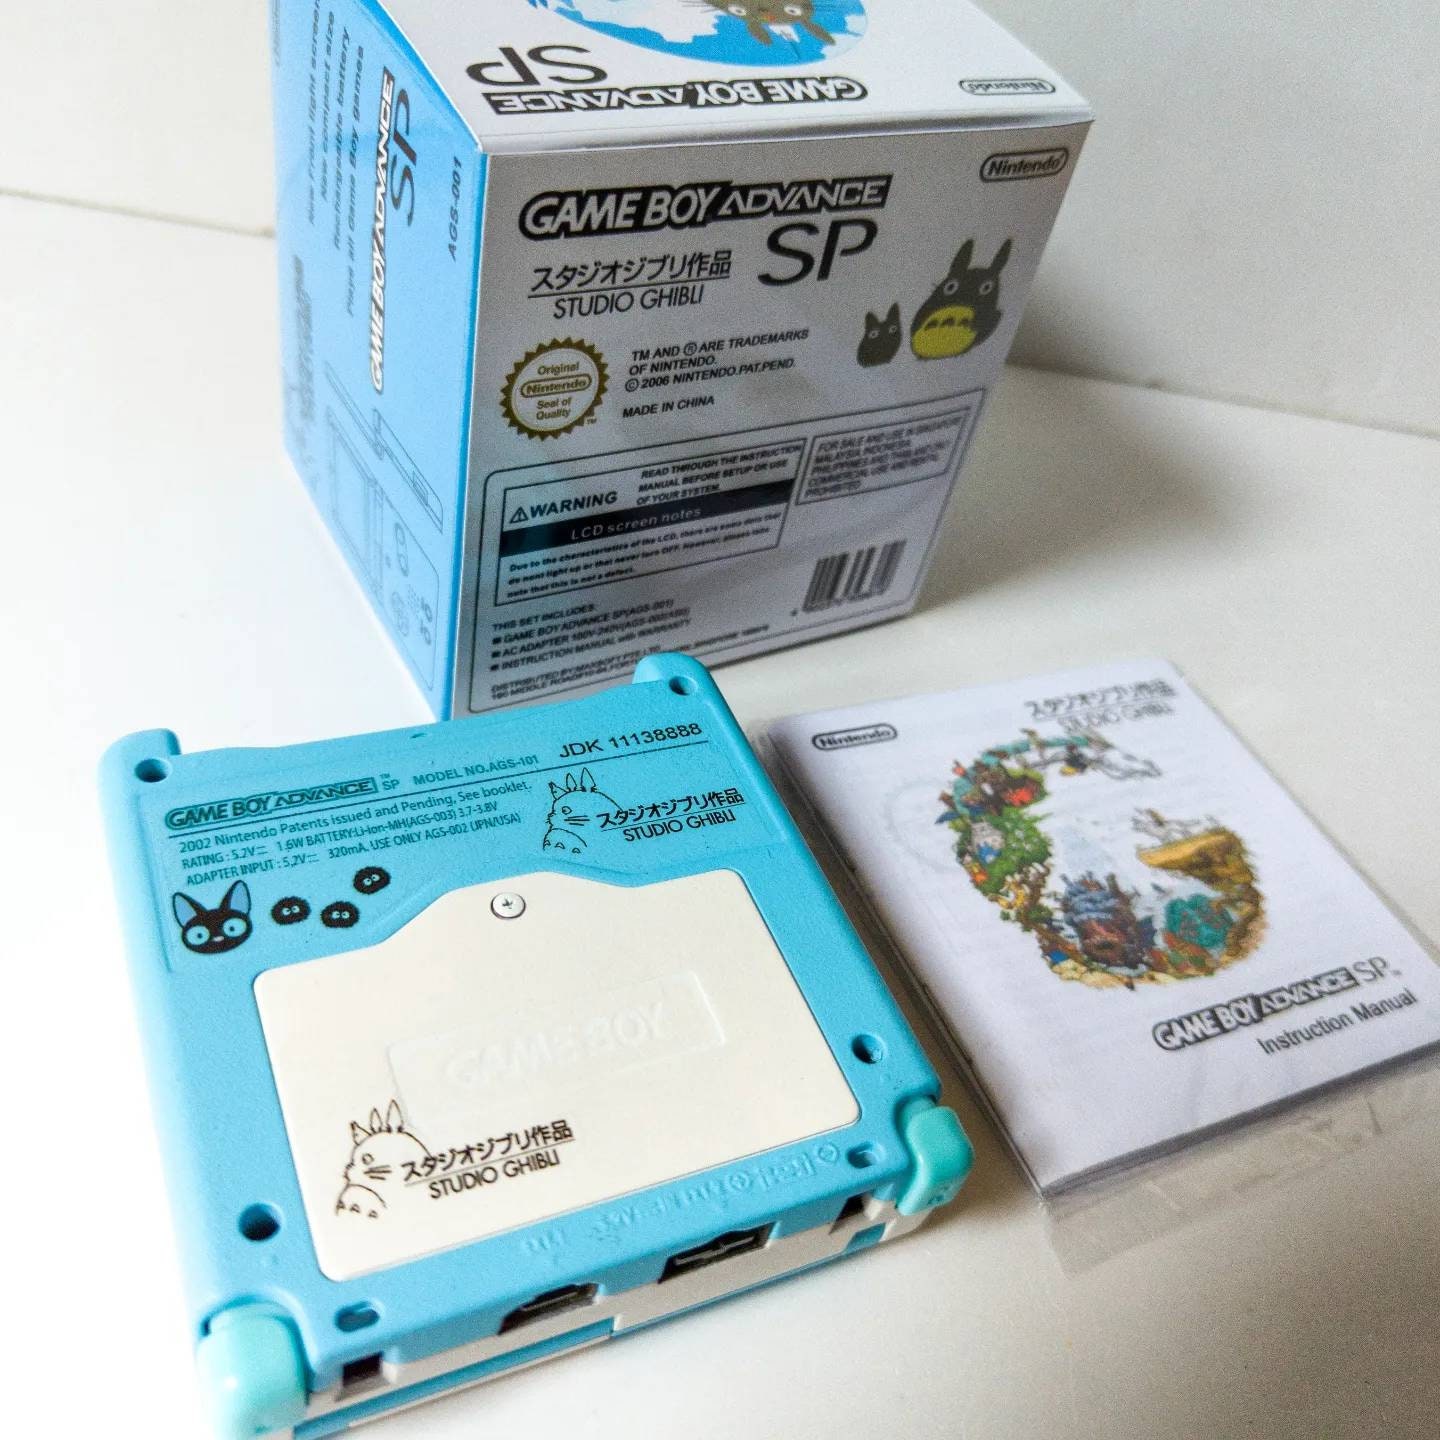 2002 Nintendo GBA Gameboy Advance ADVANCE WARS with BOX & Manual